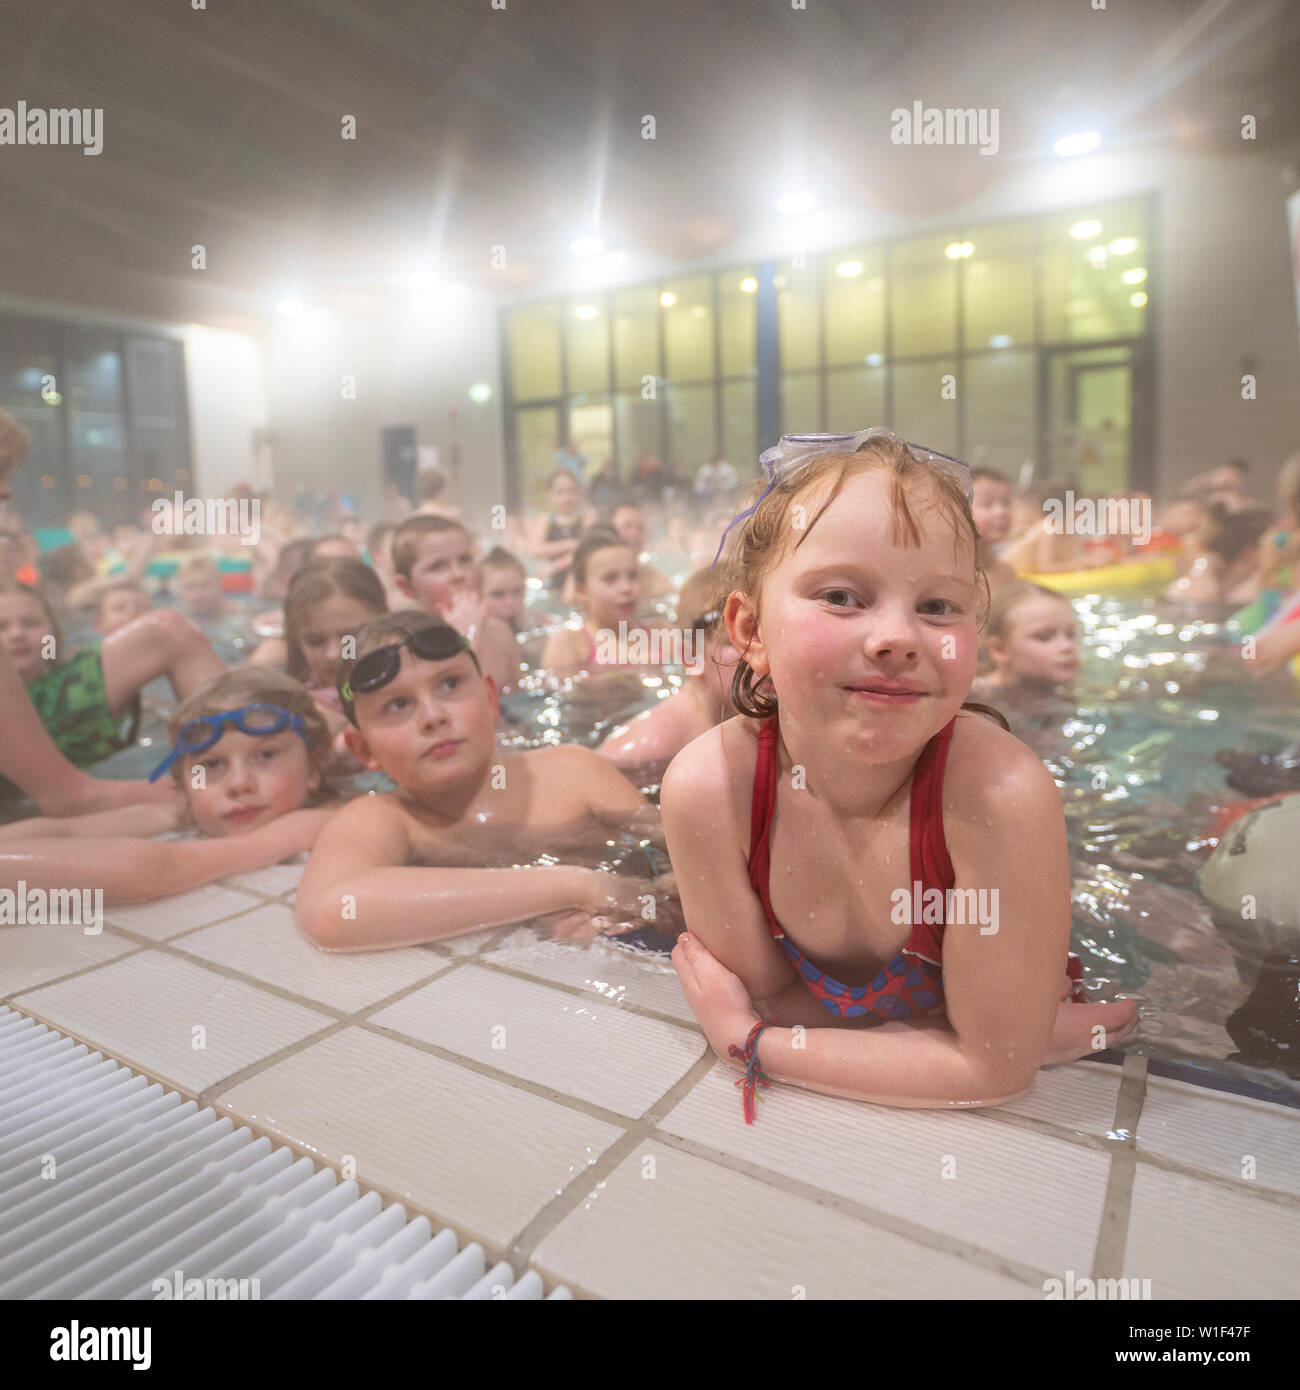 Children swimming at a local indoor pool, Kopavogur, Iceland Stock Photo